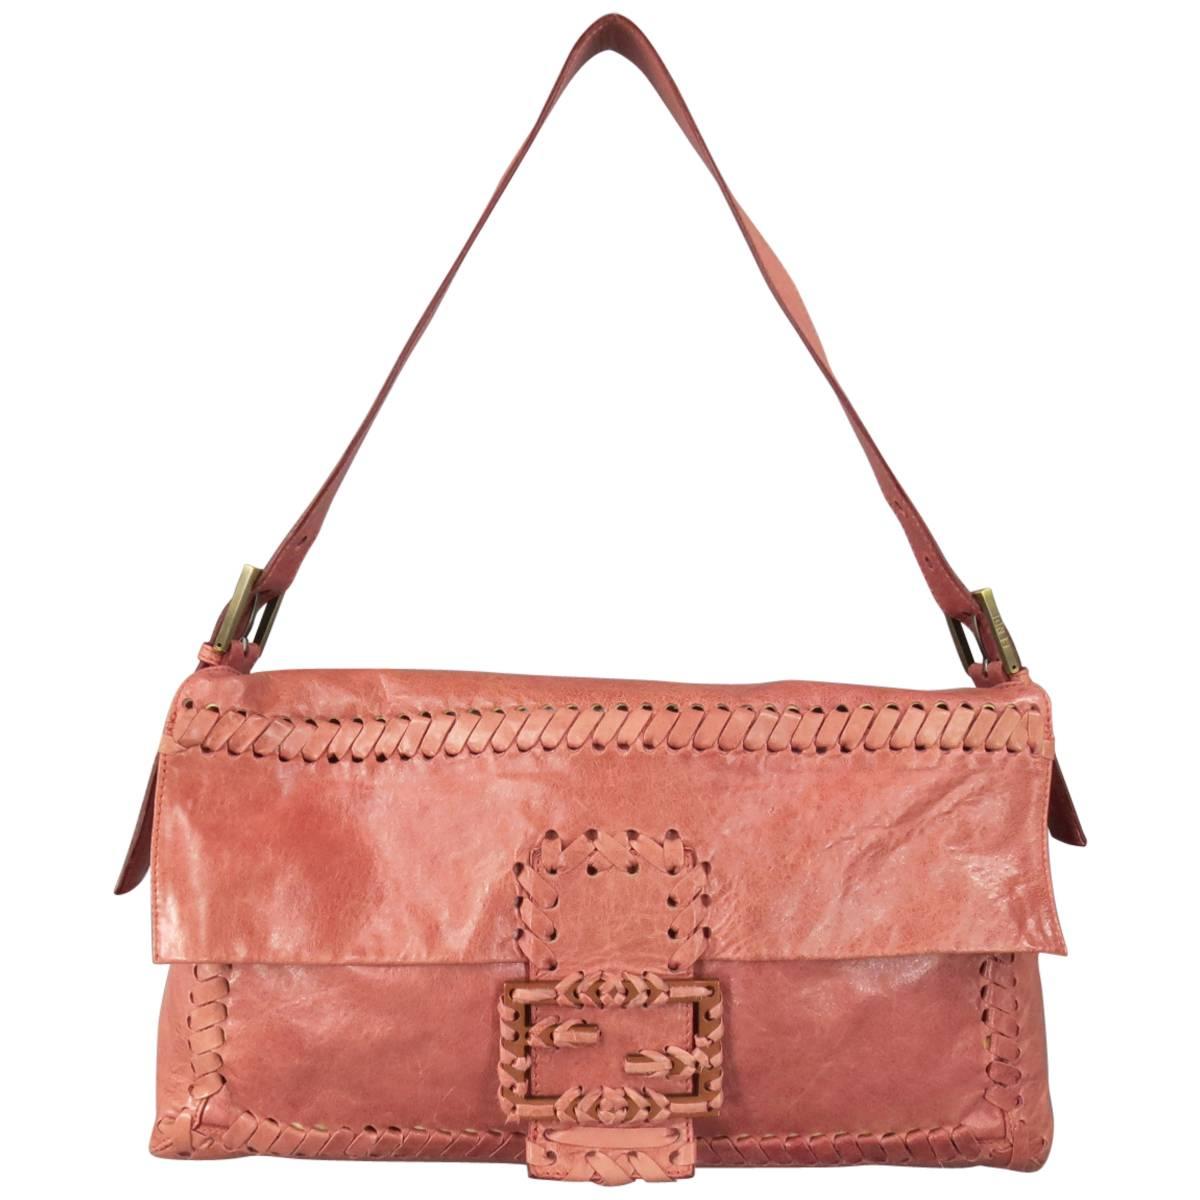 Brand New FENDI Distressed Pink Whipstitch Leather Shoulder Handbag